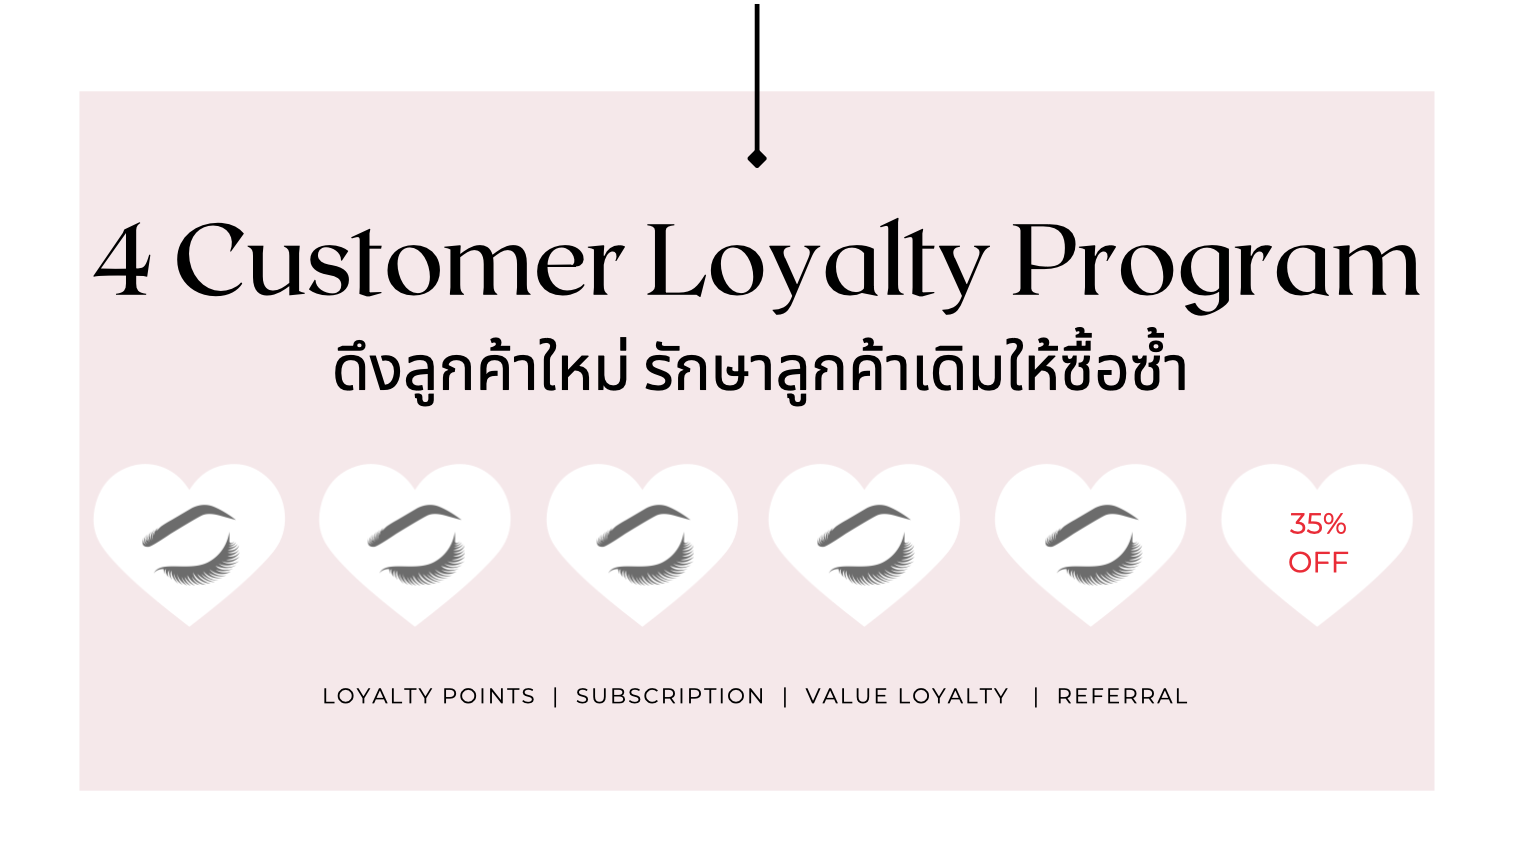 4 Customer Loyalty Program รักษาลูกค้าเดิมให้ซื้อซ้ำ และดึงลูกค้าใหม่